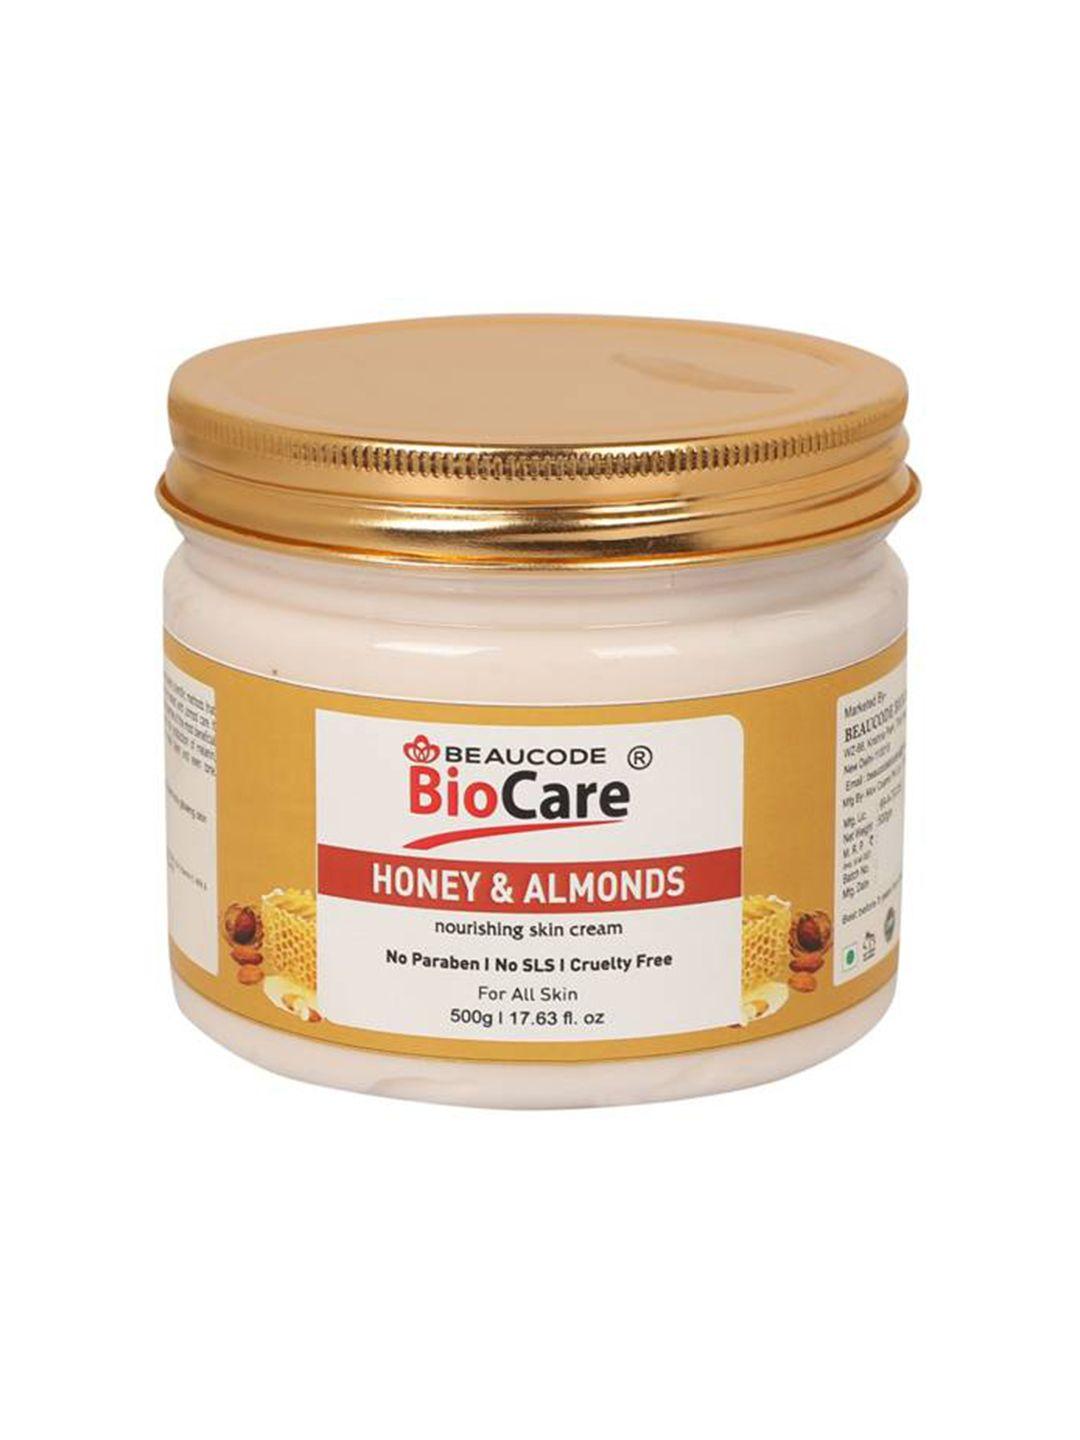 beaucode biocare honey & almonds paraben free face & body cream - 500g